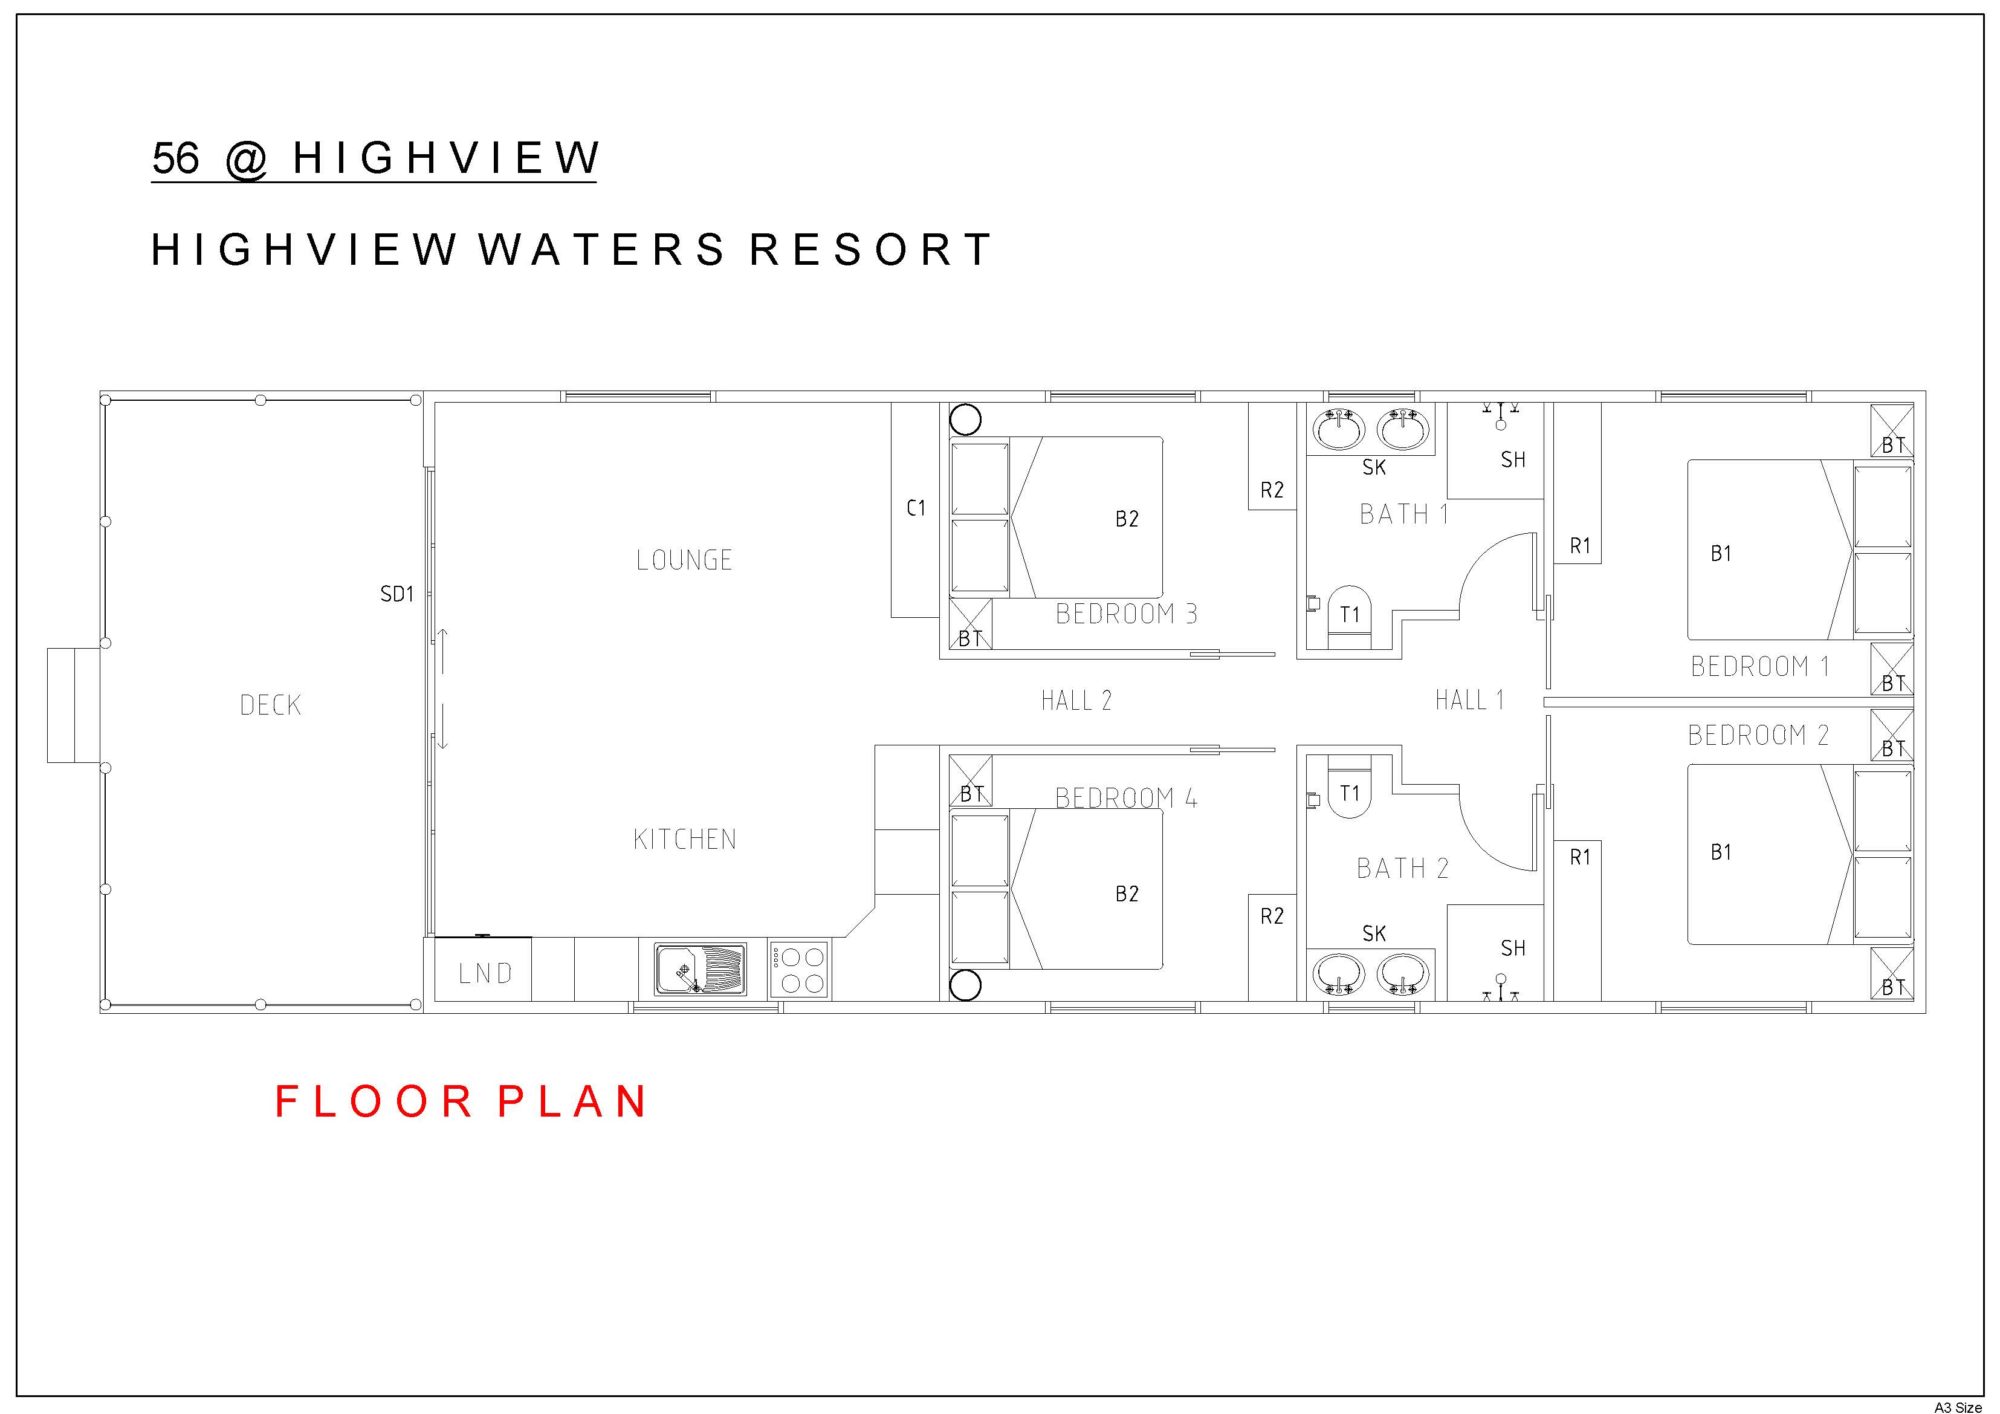 56@Highview Floor Plan